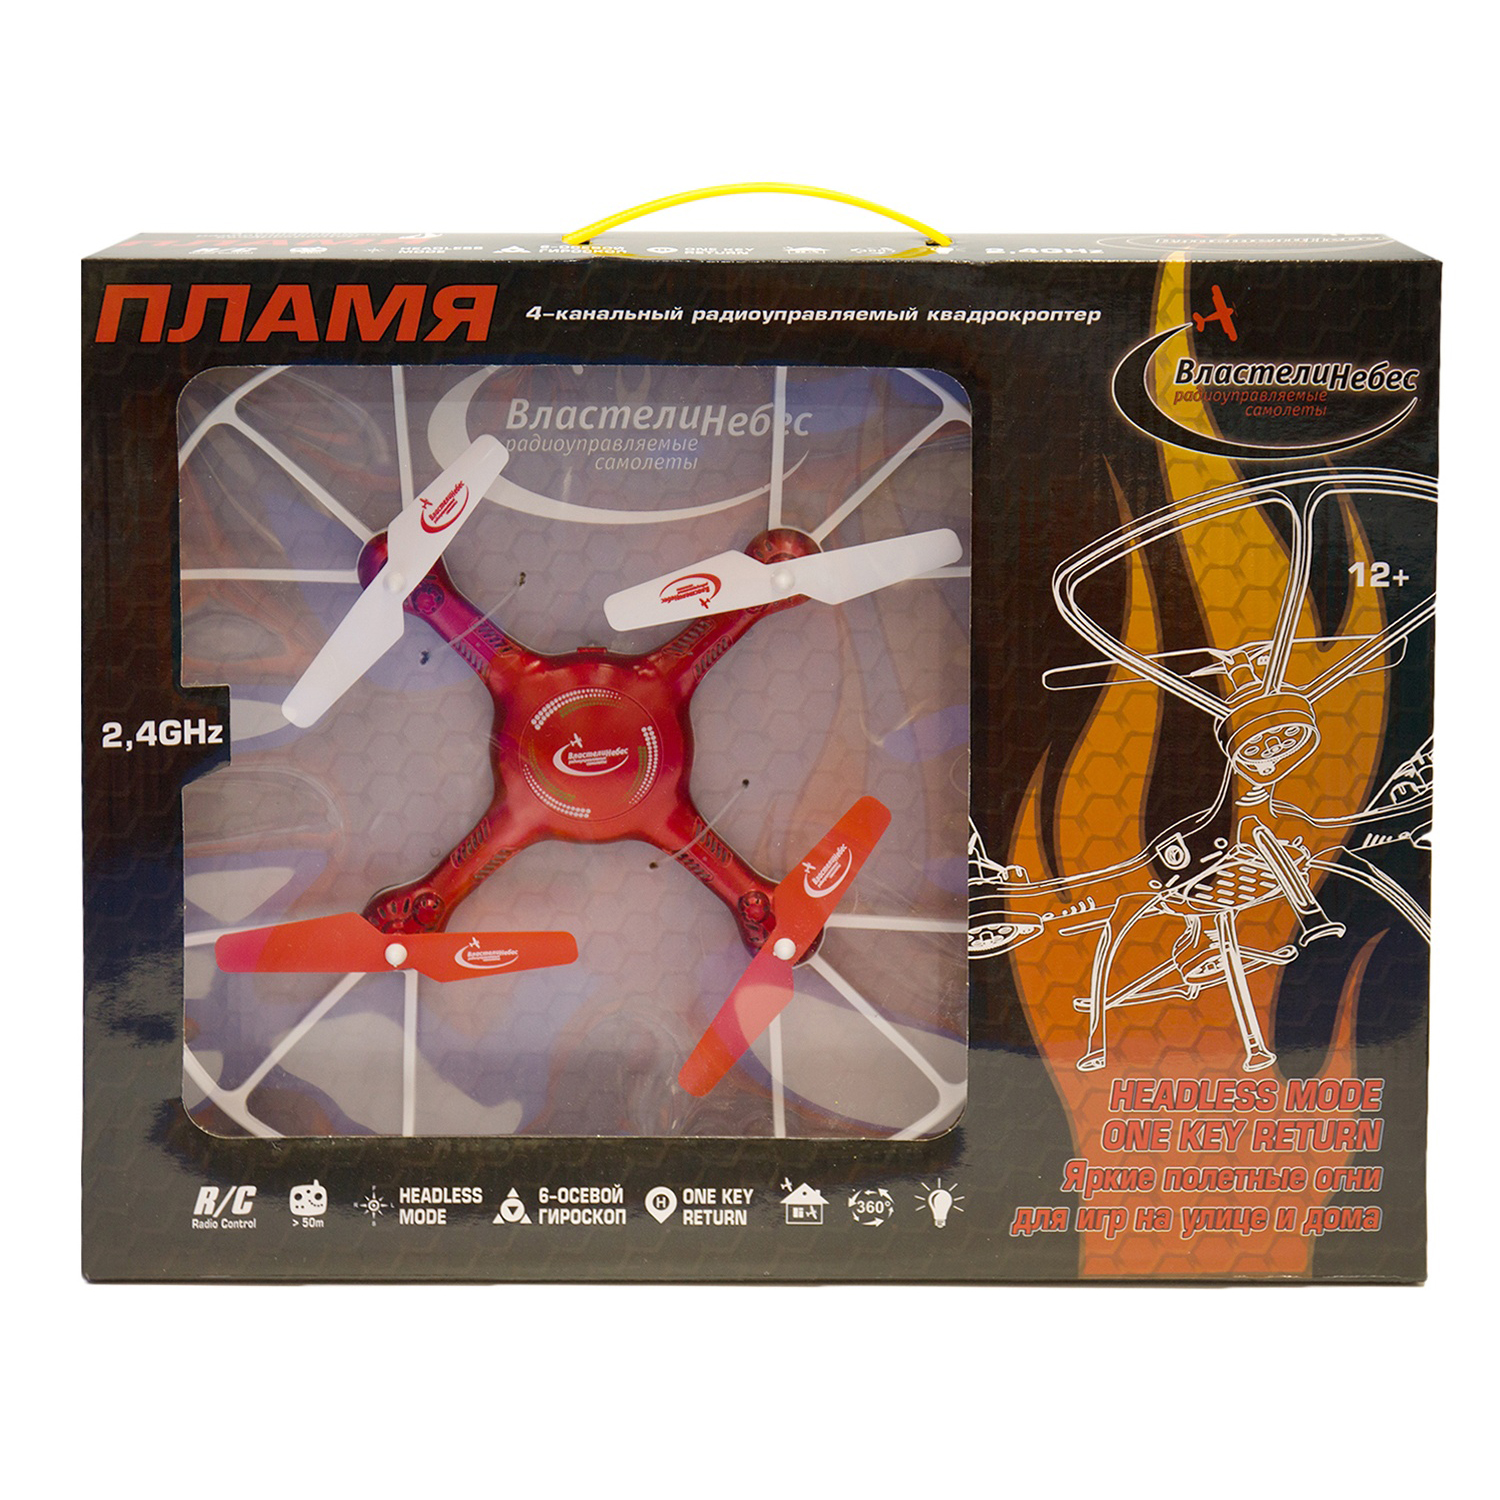 Игрушка Властелин небес Квадрокоптер Пламя BH3449 - фото 3